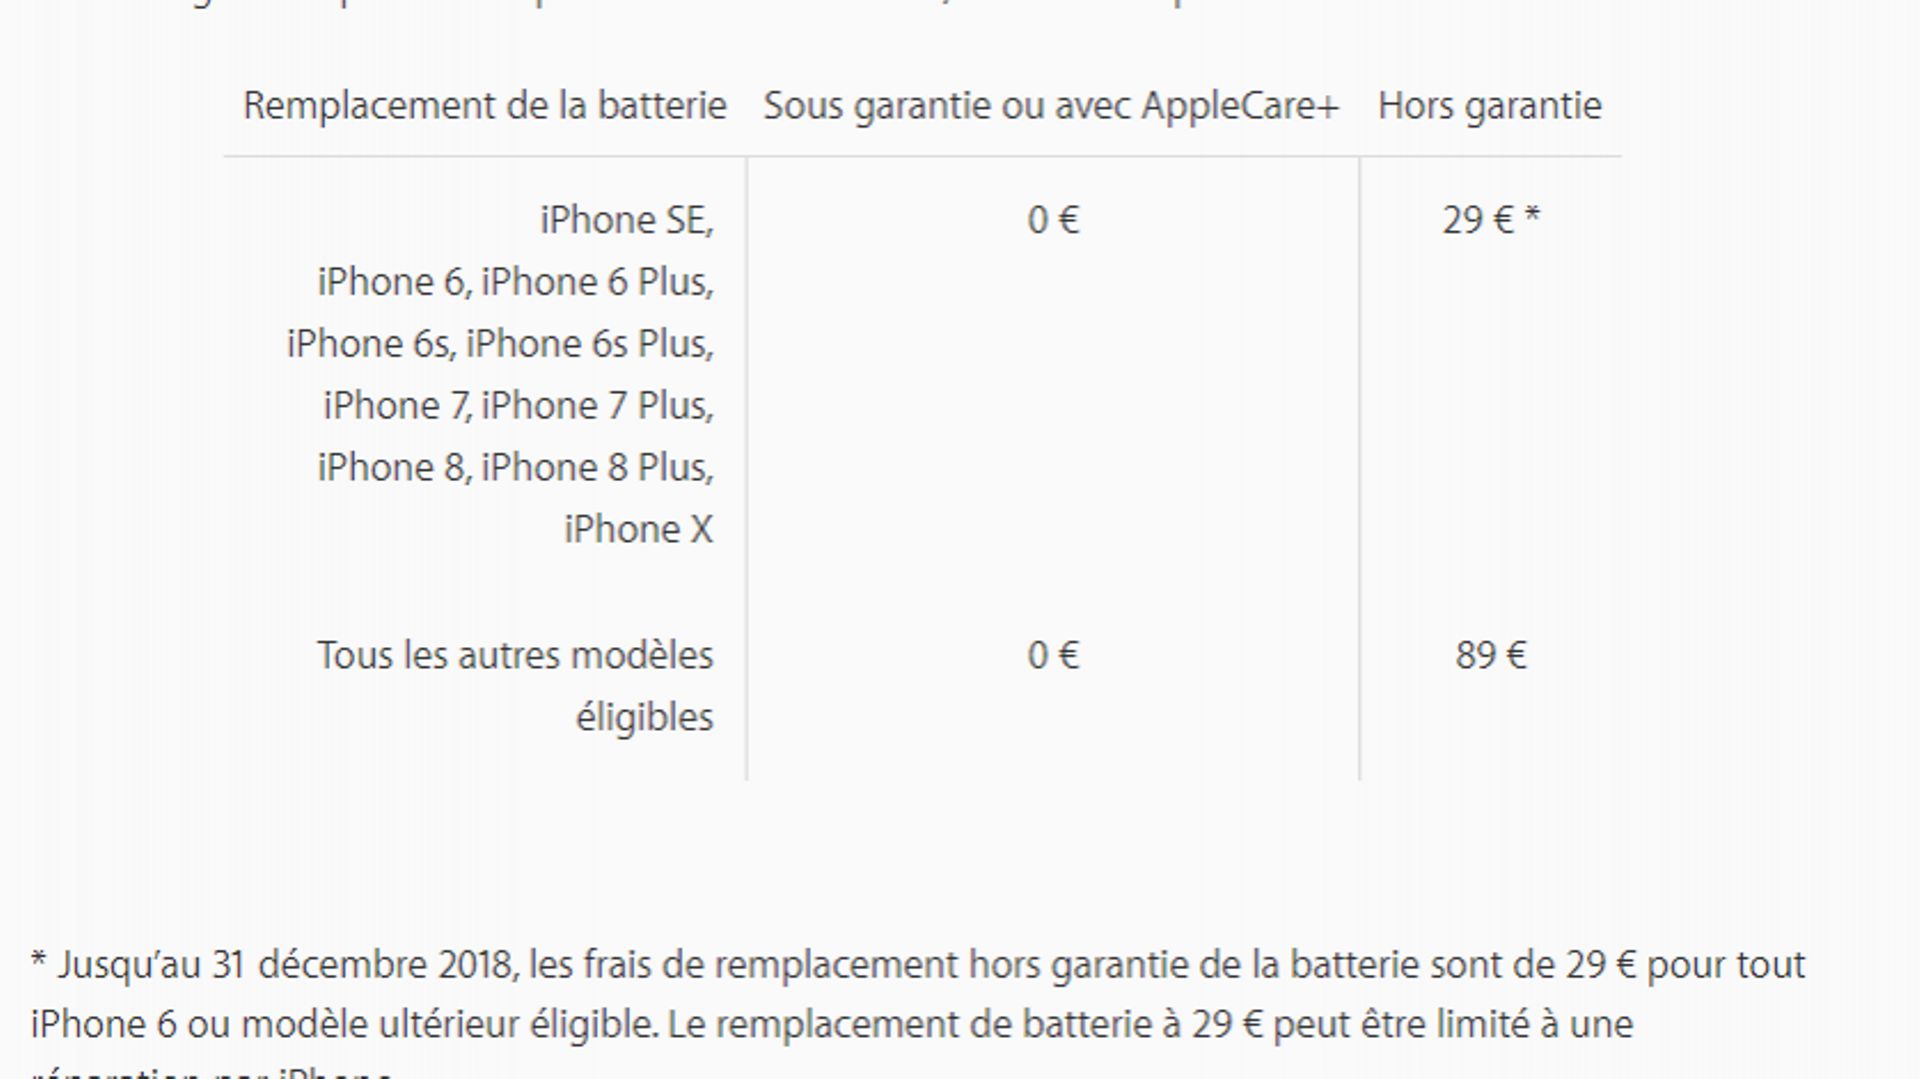 Reparation Batterie Pour iPhone 6s au Luxembourg